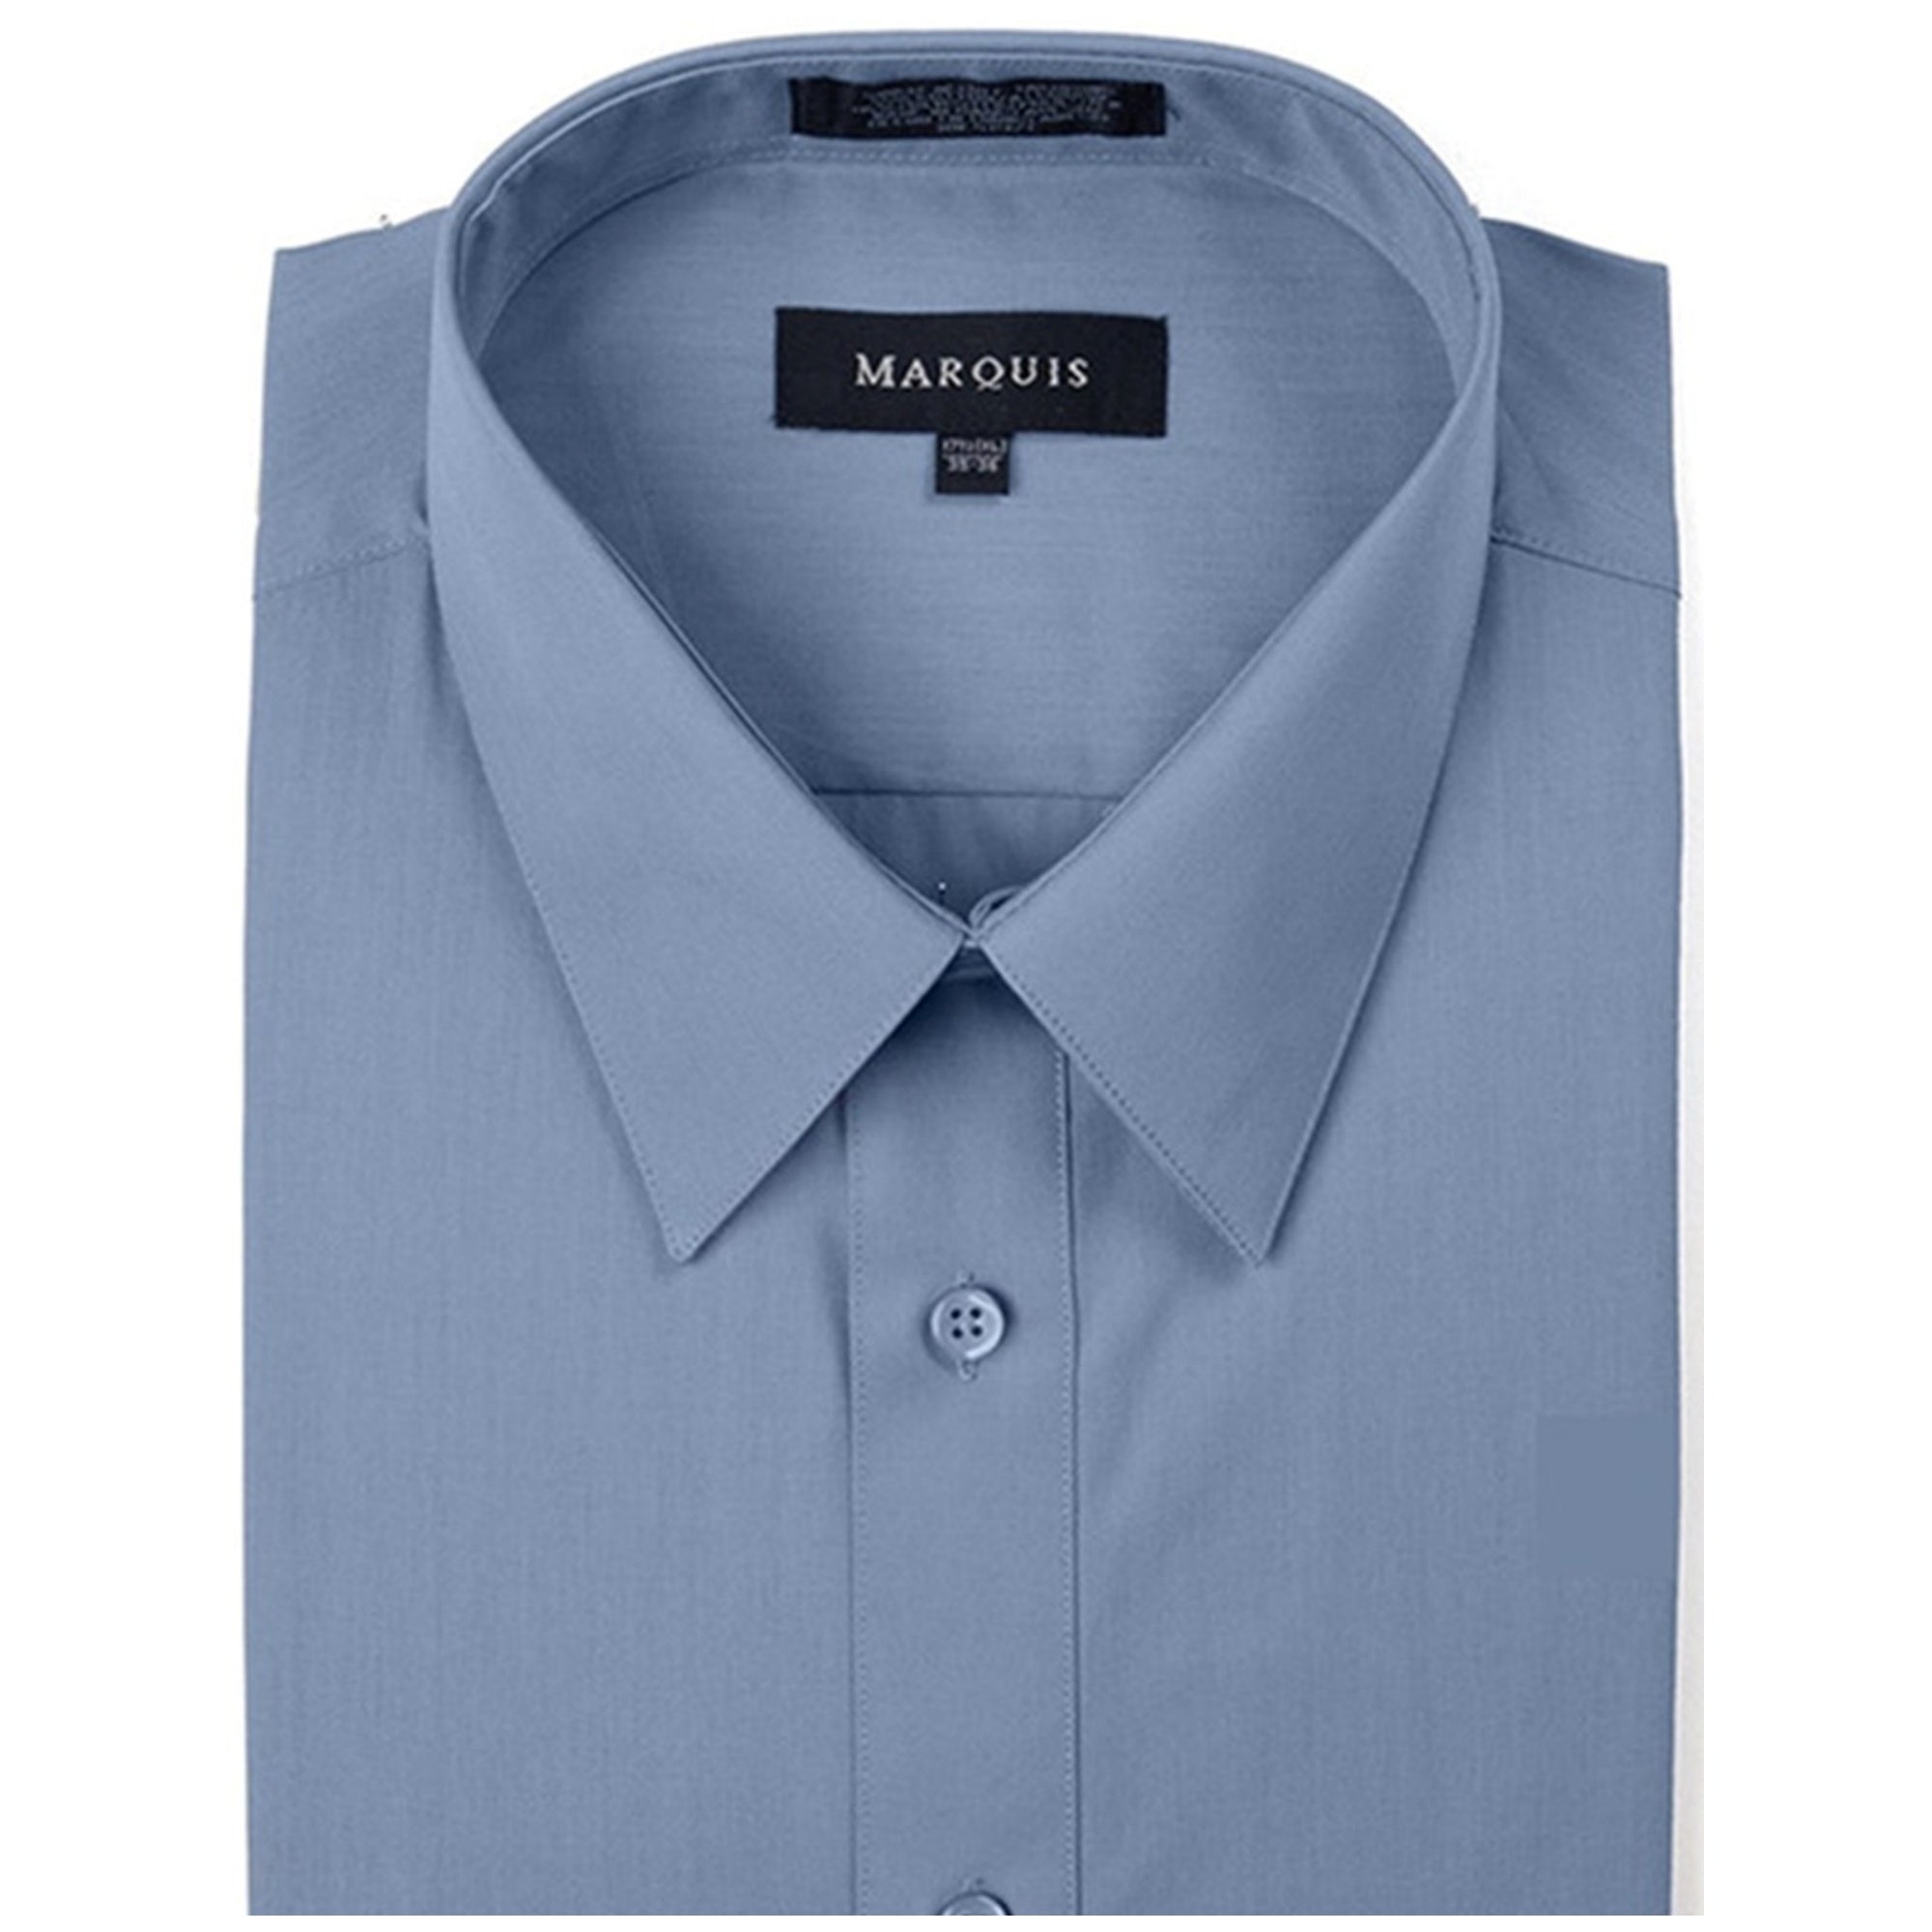 Marquis Men's Long Sleeve Slim Fit Dress Shirt Slim Fit Dress Shirt Marquis Steel Blue 18-18.5 Neck 34/35 Sleeve 